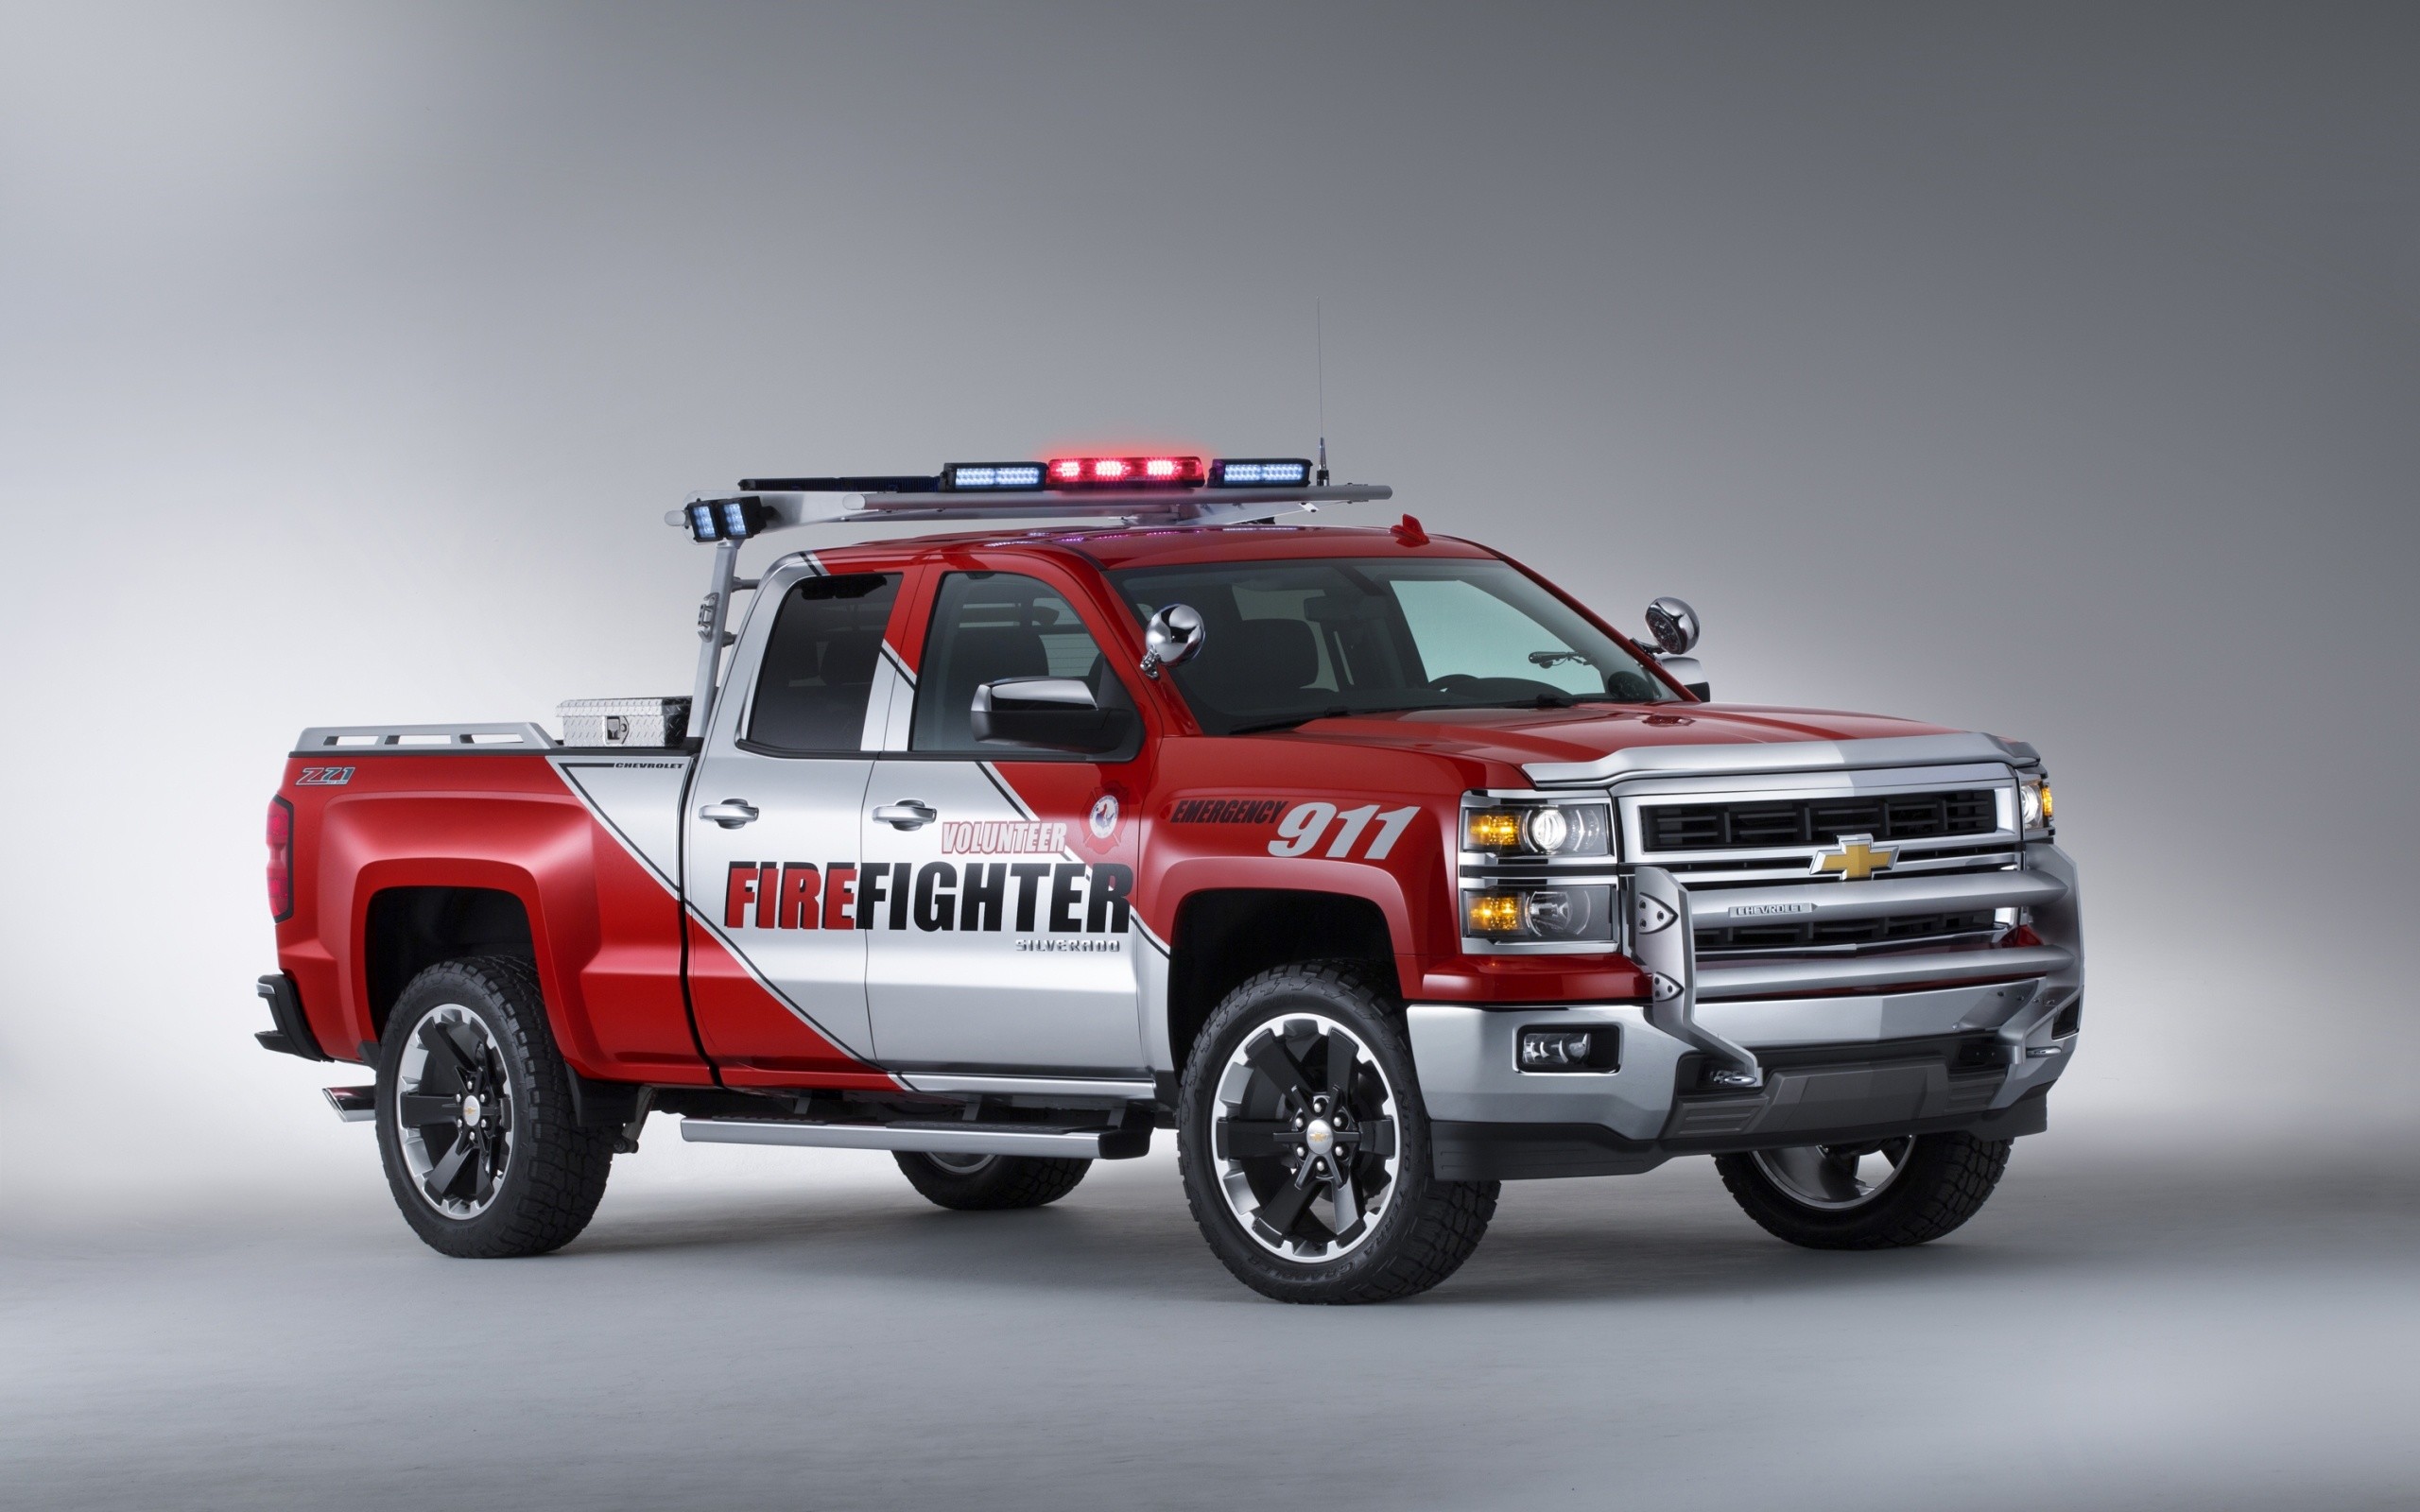 2560x1600 Chevrolet Silverado Firefighter 2013